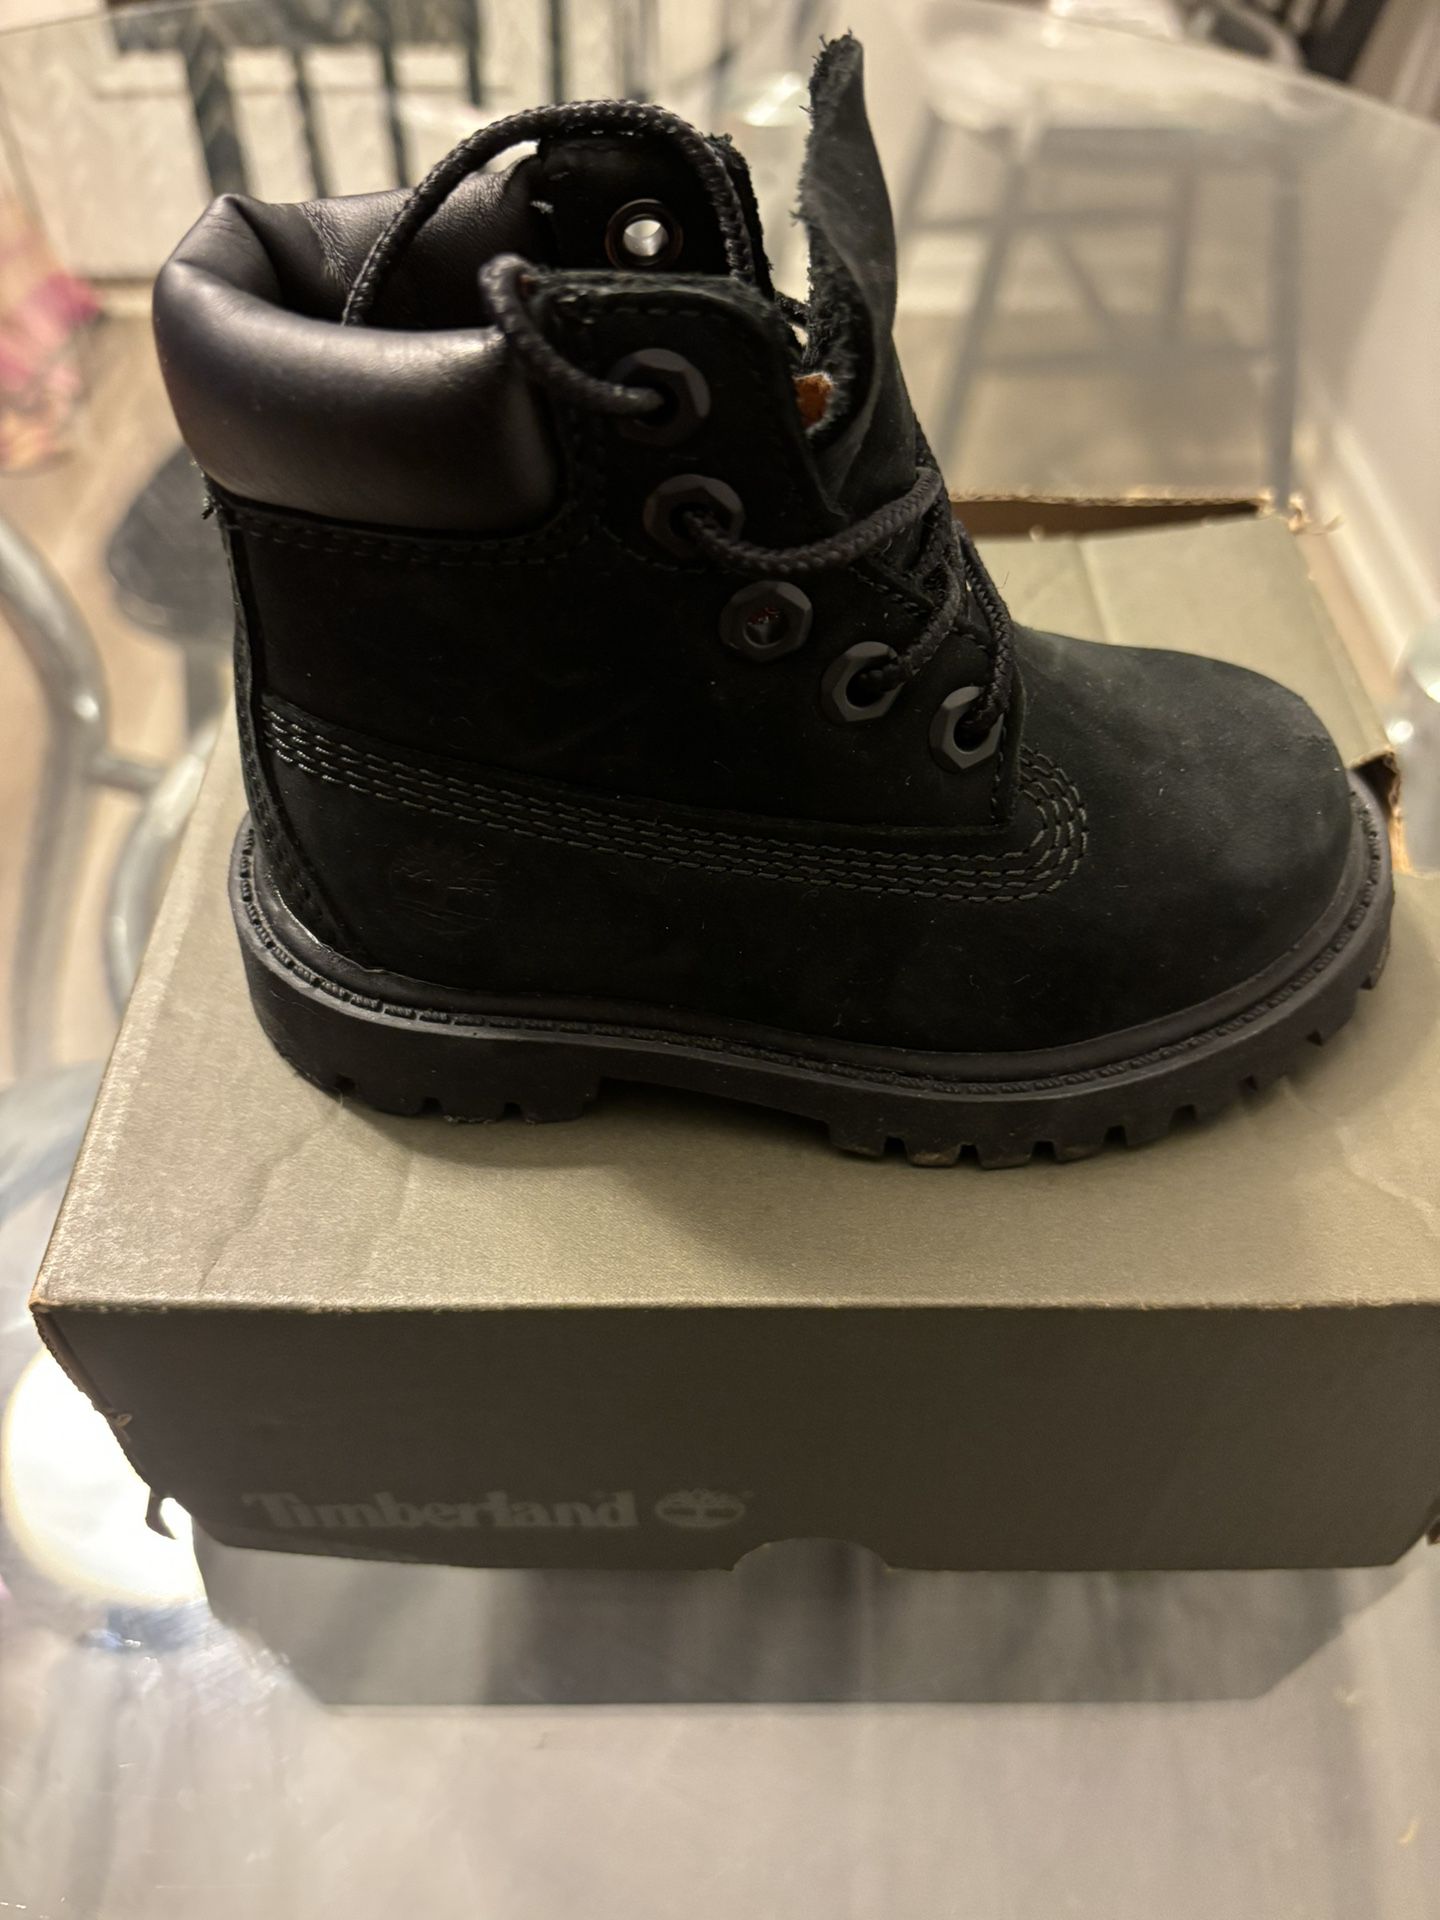 Toddler Timberland boots black 